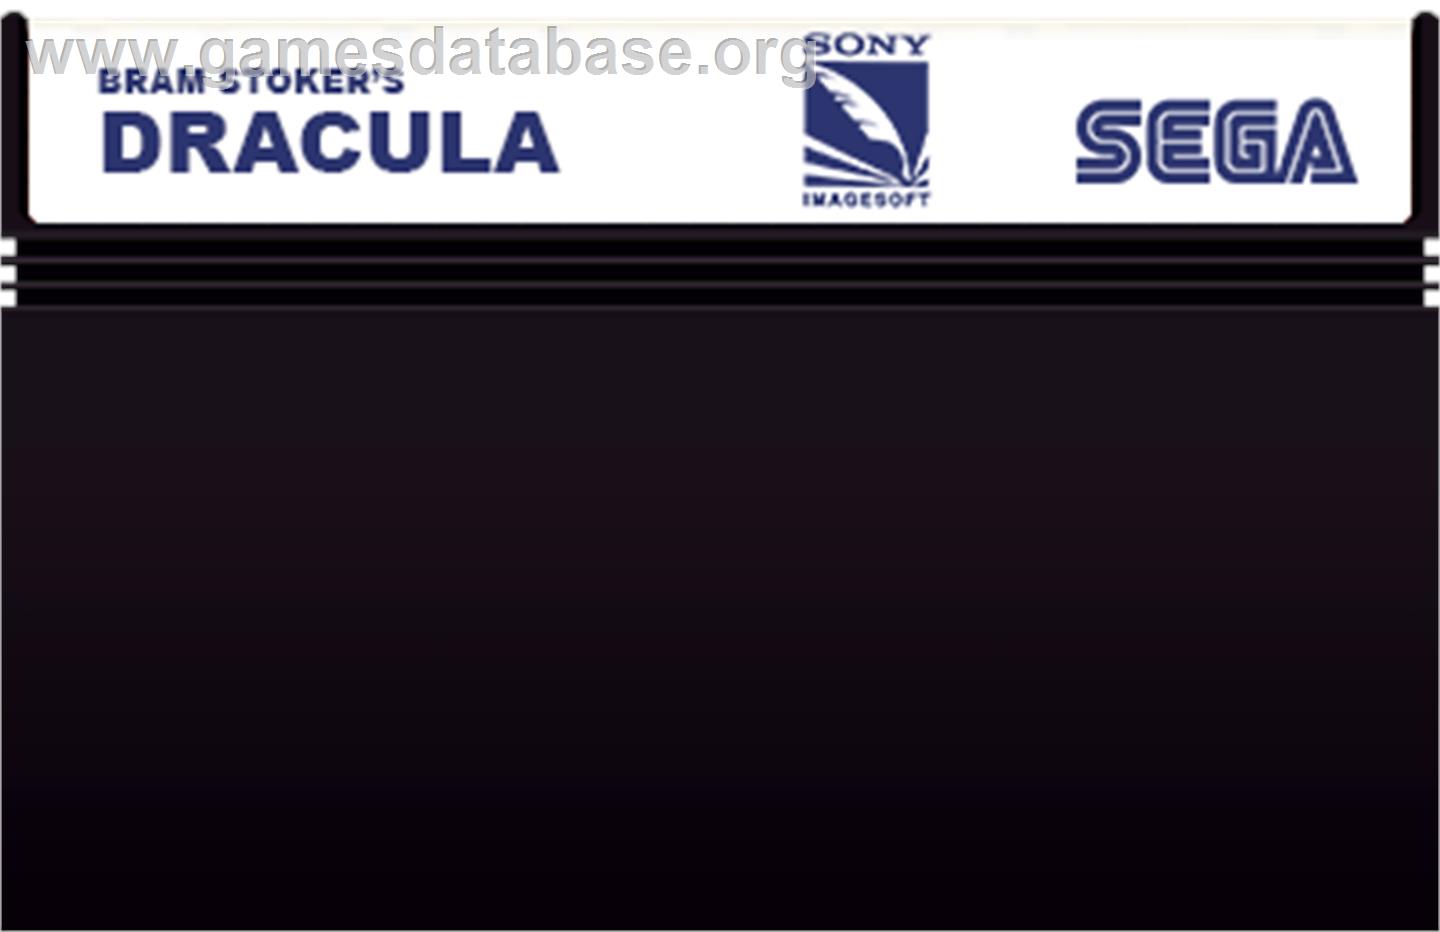 Bram Stoker's Dracula - Sega Master System - Artwork - Cartridge